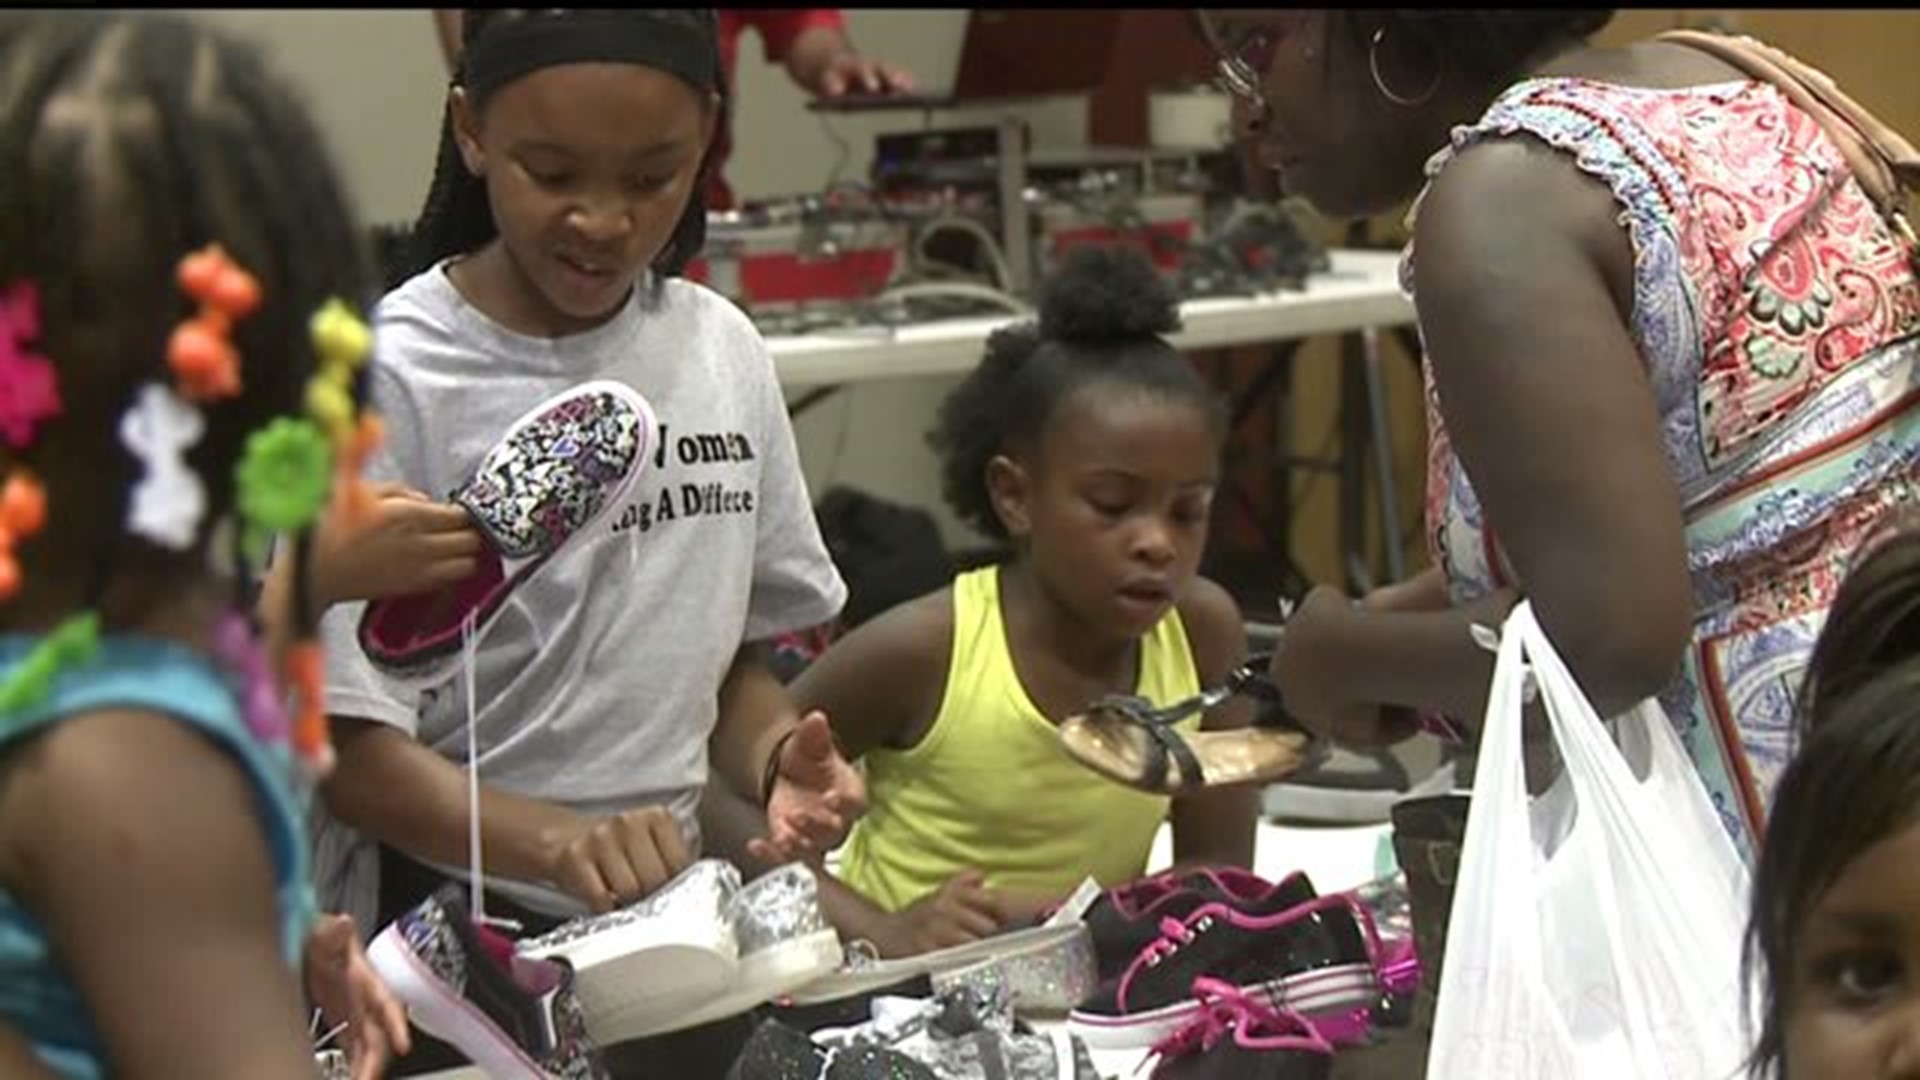 Shoe giveaway helps kids in need in Rock Island